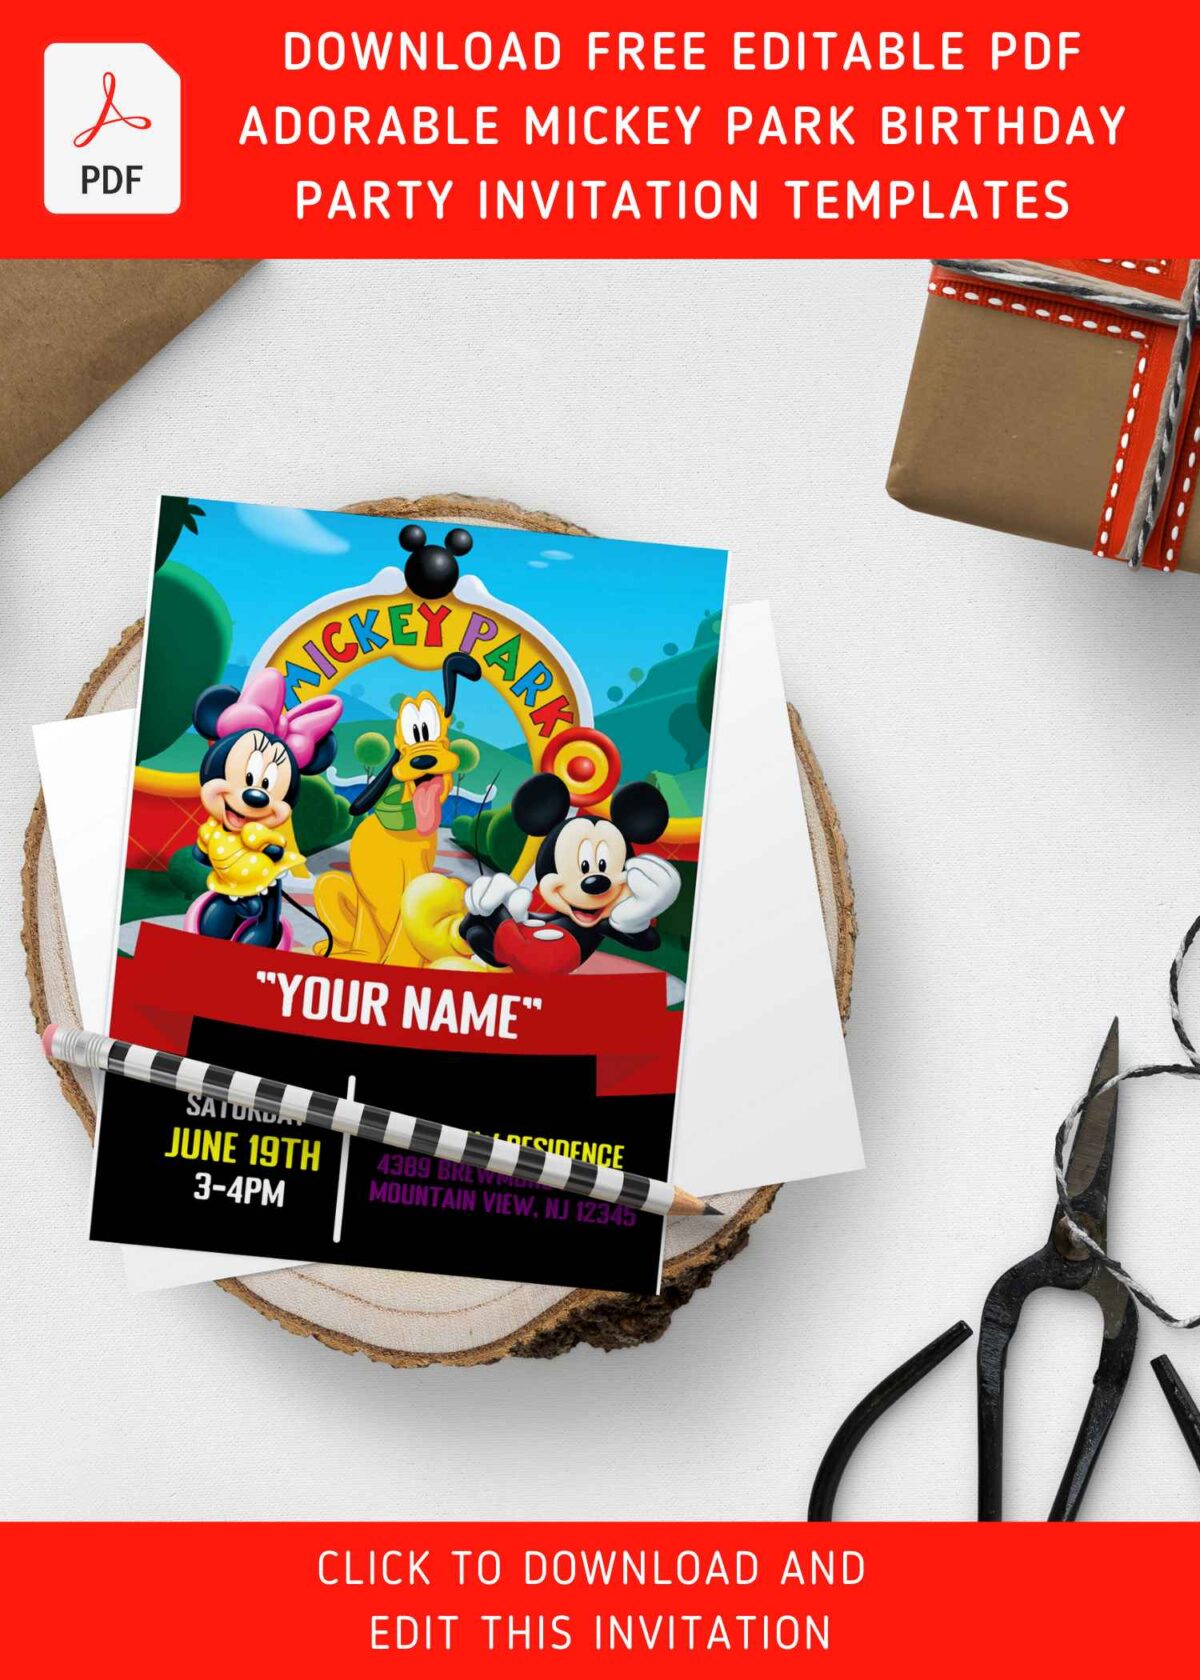 (Free Editable PDF) Adorable Mickey Park Birthday Invitation Templates with editable text